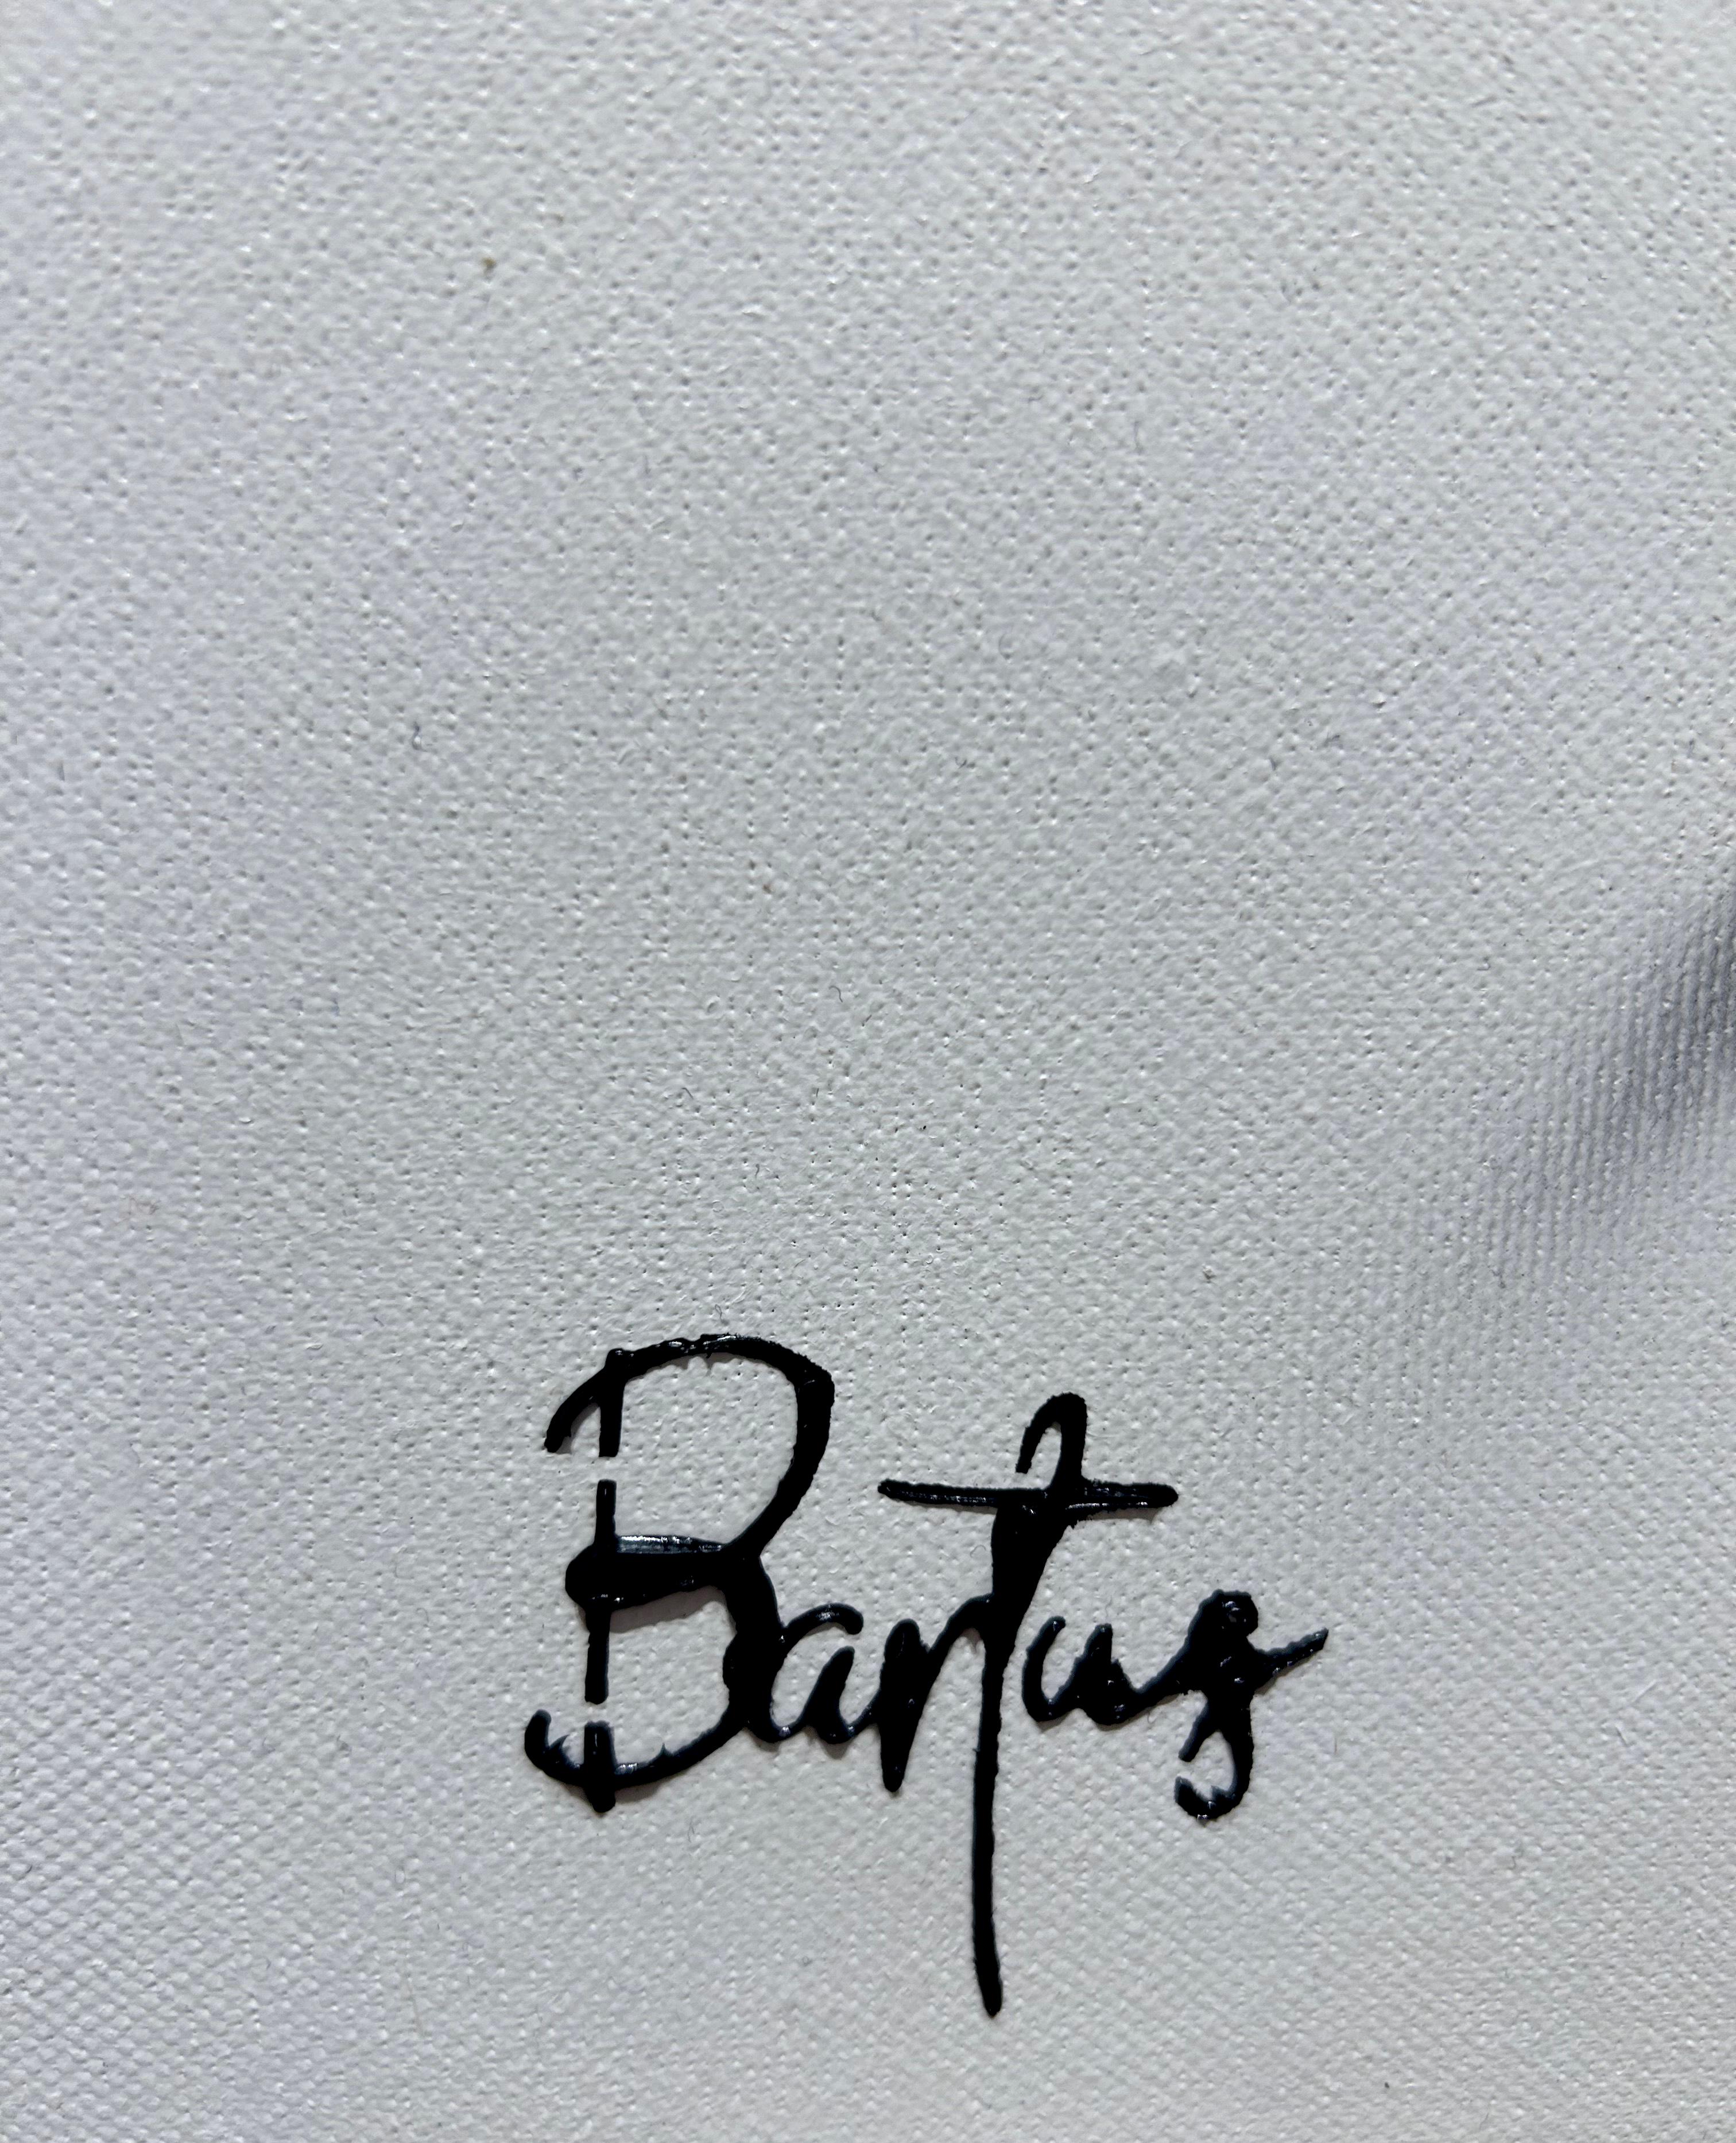 Bartus, 